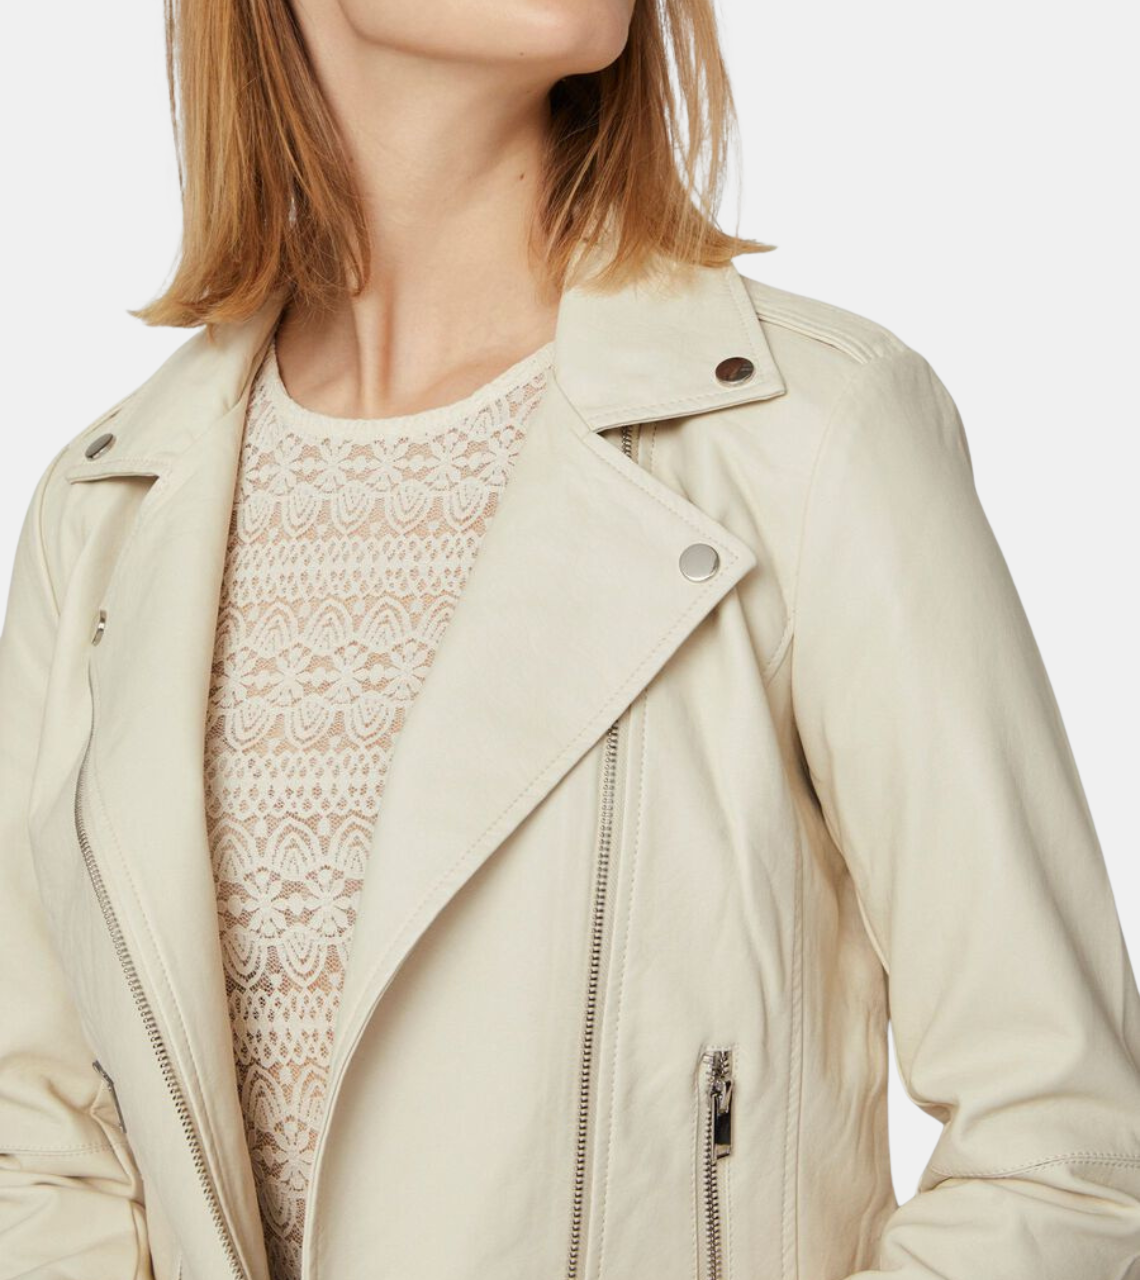  Birch White Leather Jacket